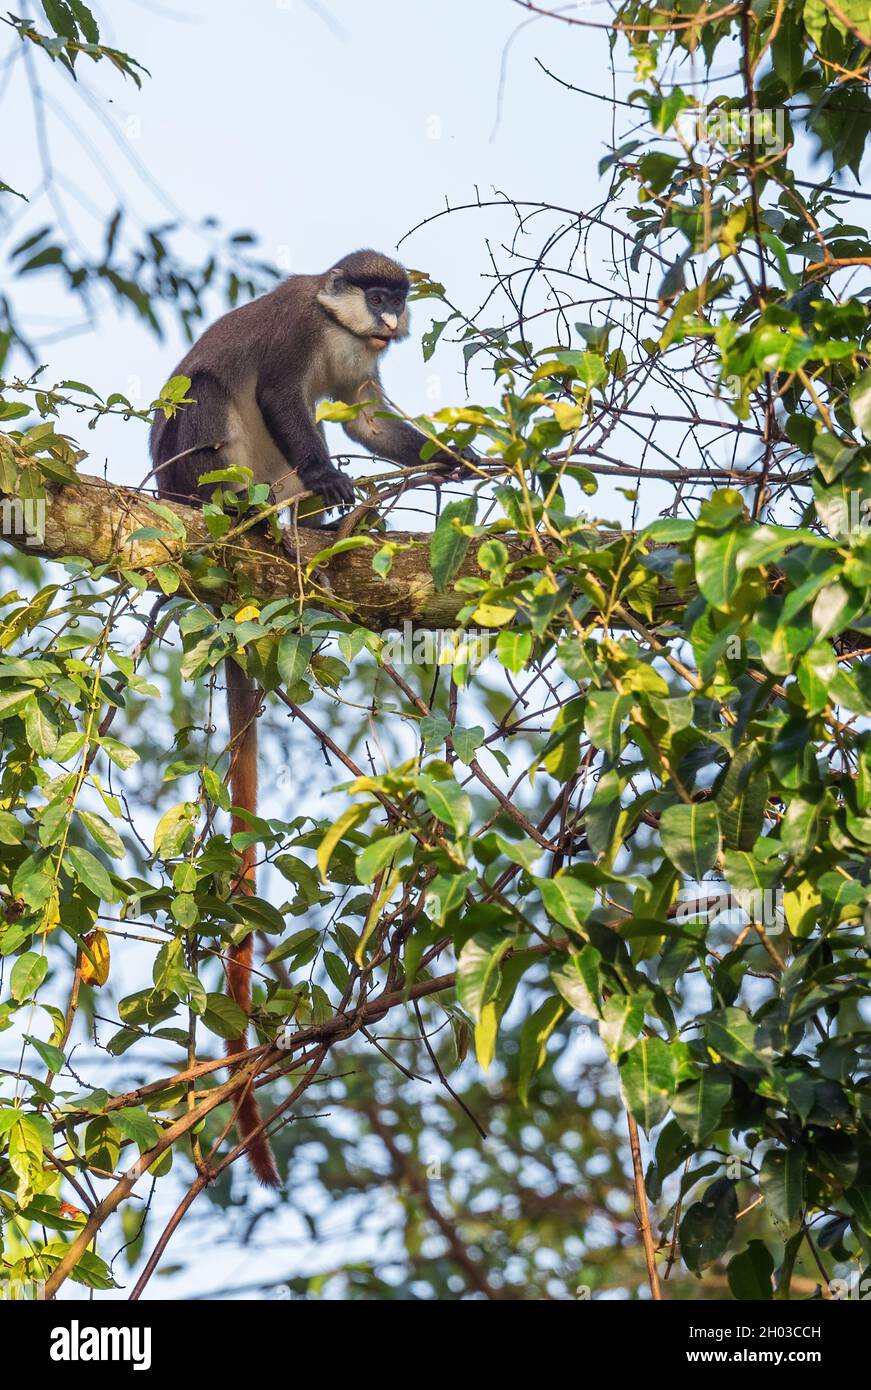 Red-tailed Monkey - Cercopithecus ascanius, rare shy monkey from African forests, Budongo forest, Uganda. Stock Photo